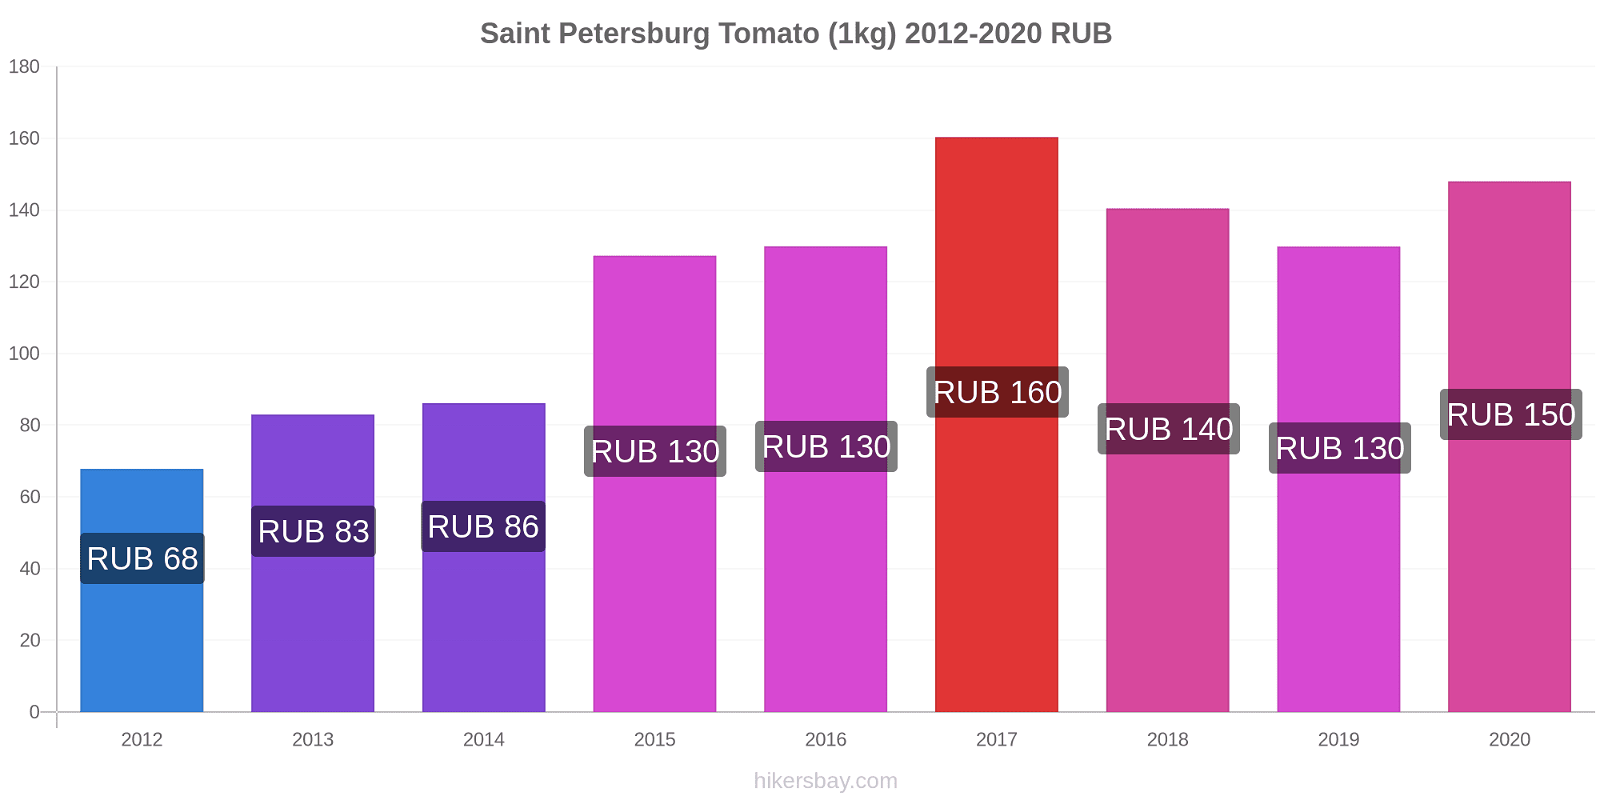 Saint Petersburg price changes Tomato (1kg) hikersbay.com